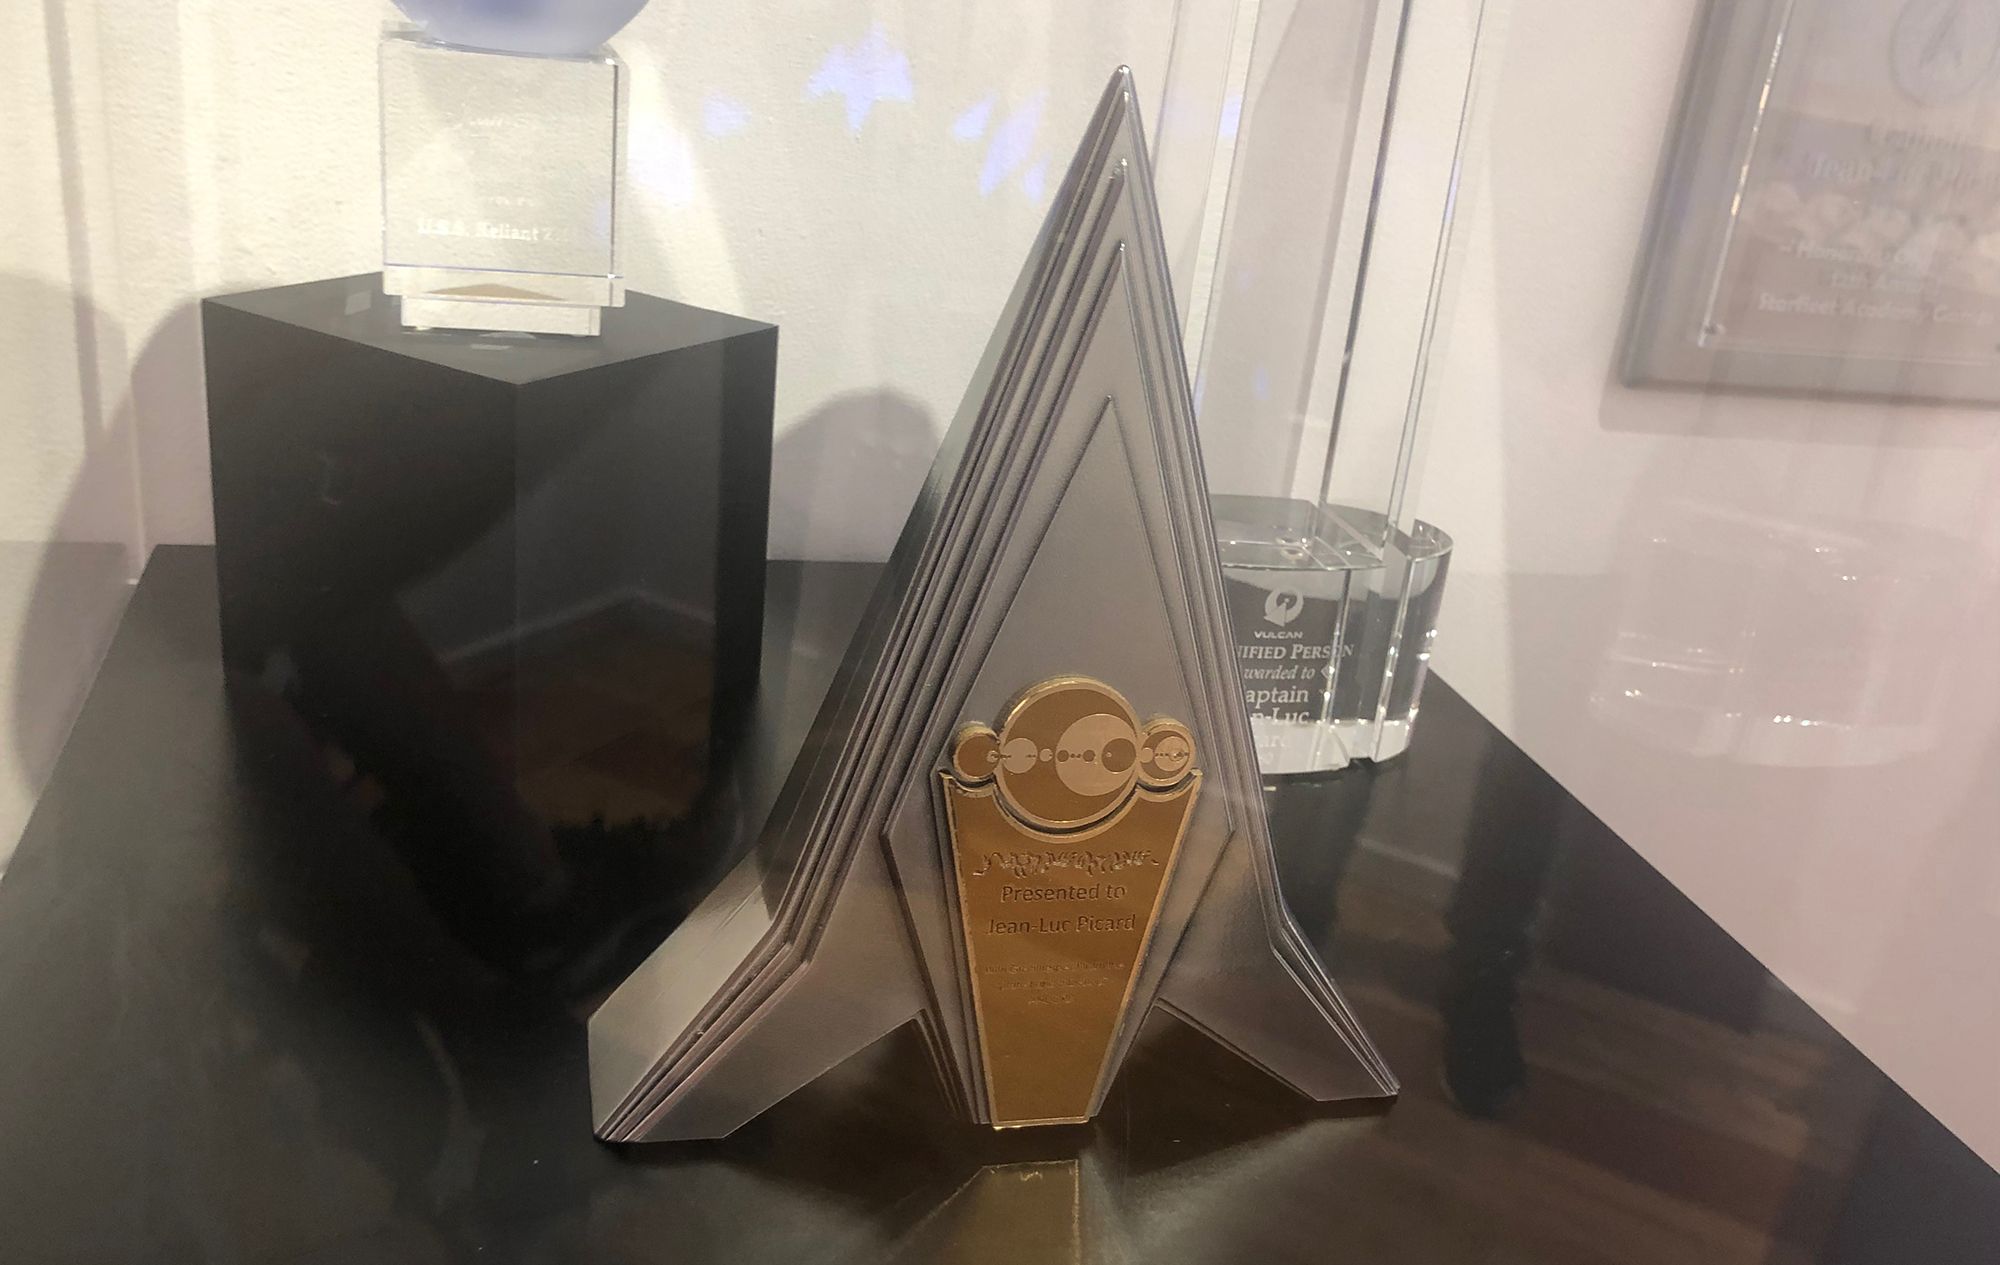 SDCC Picard trophy